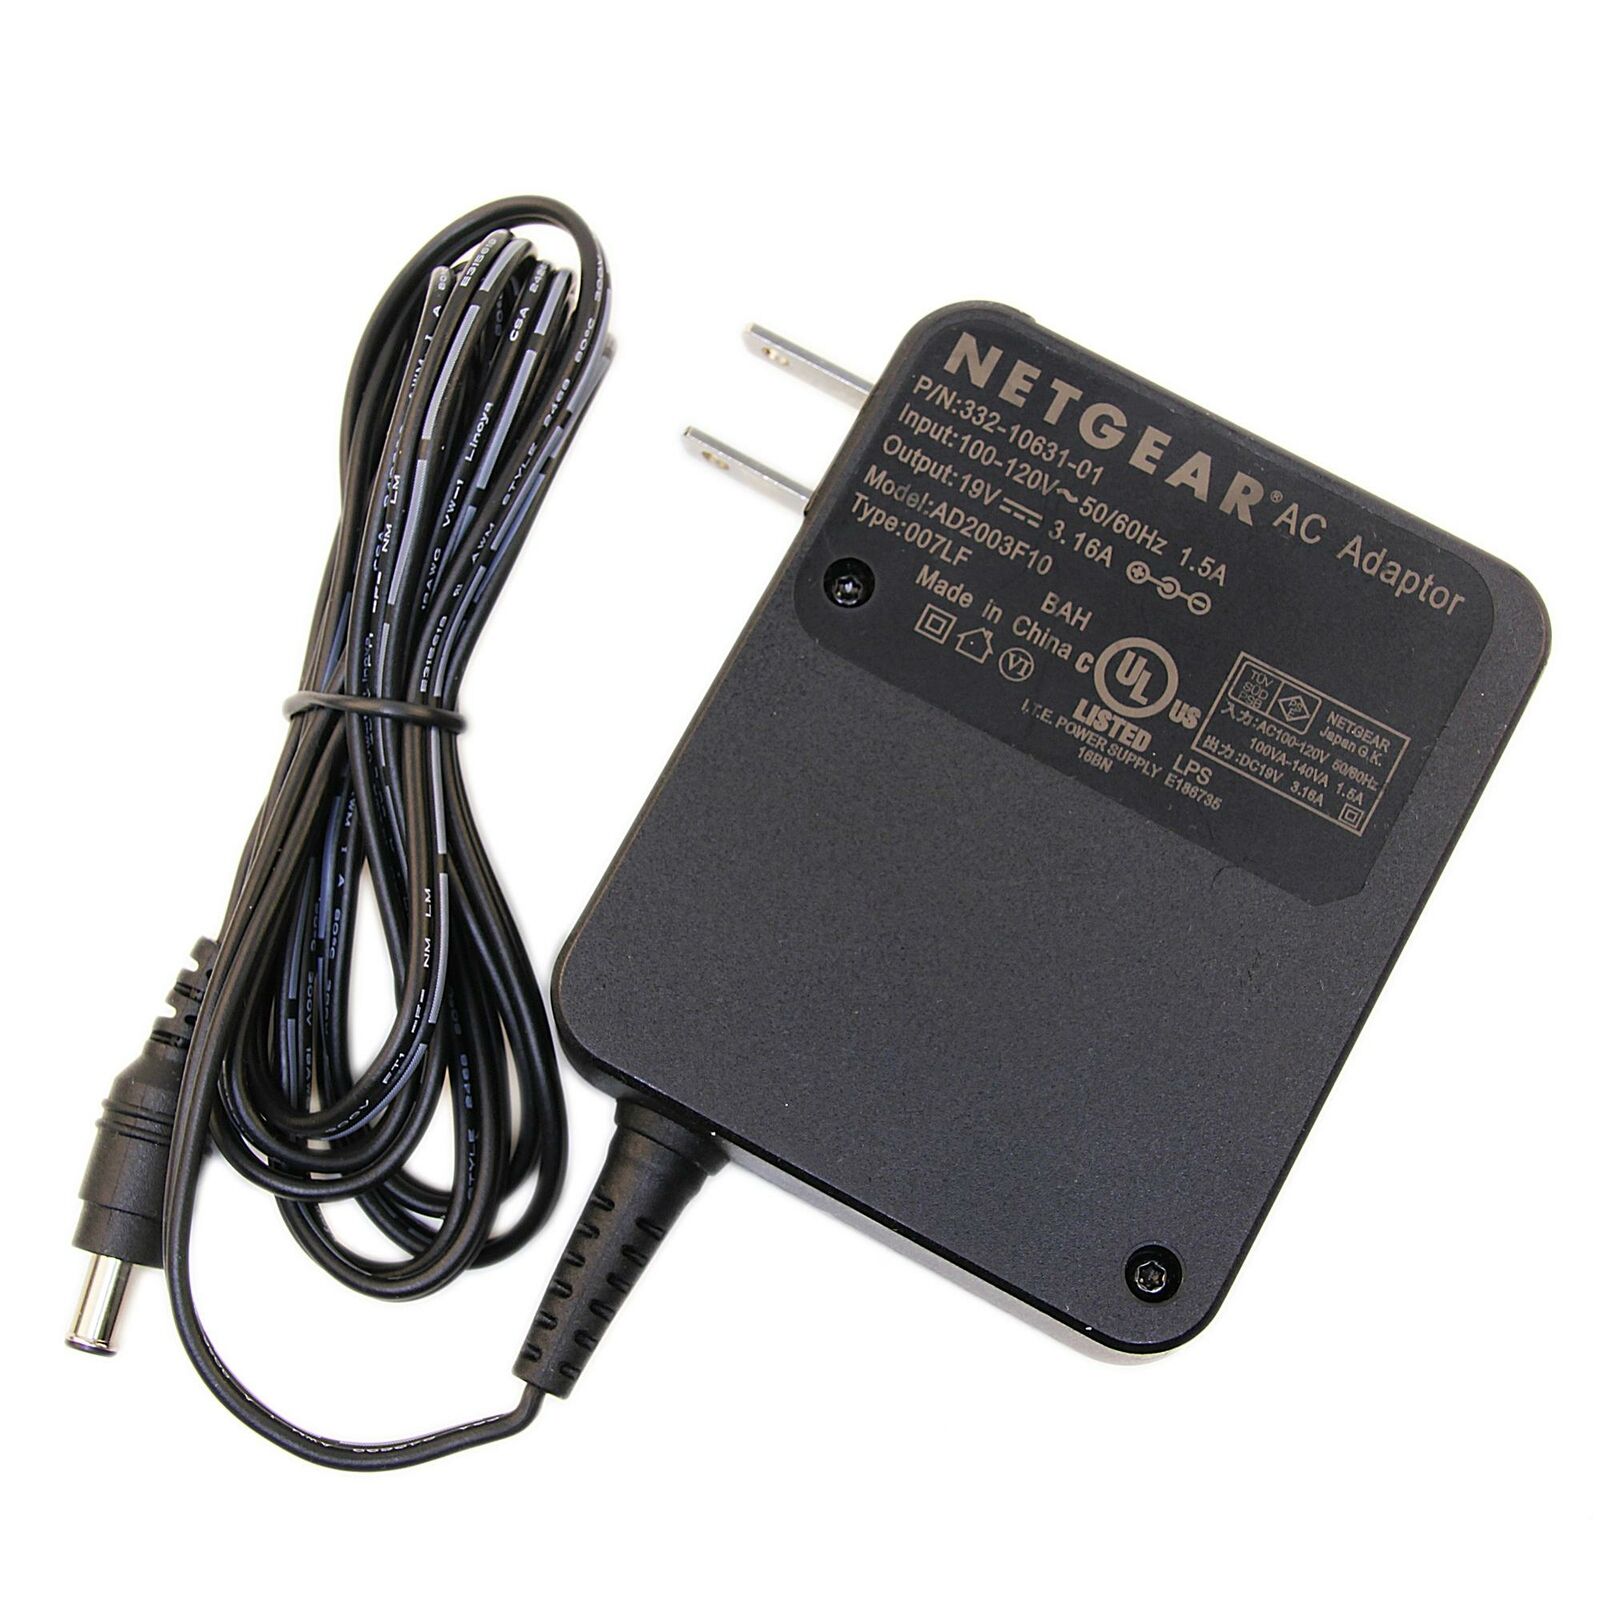 Genuine Netgear Nighthawk X4 AC3200 WiFi Cable Modem Router ( C7500 ) AC Adapter